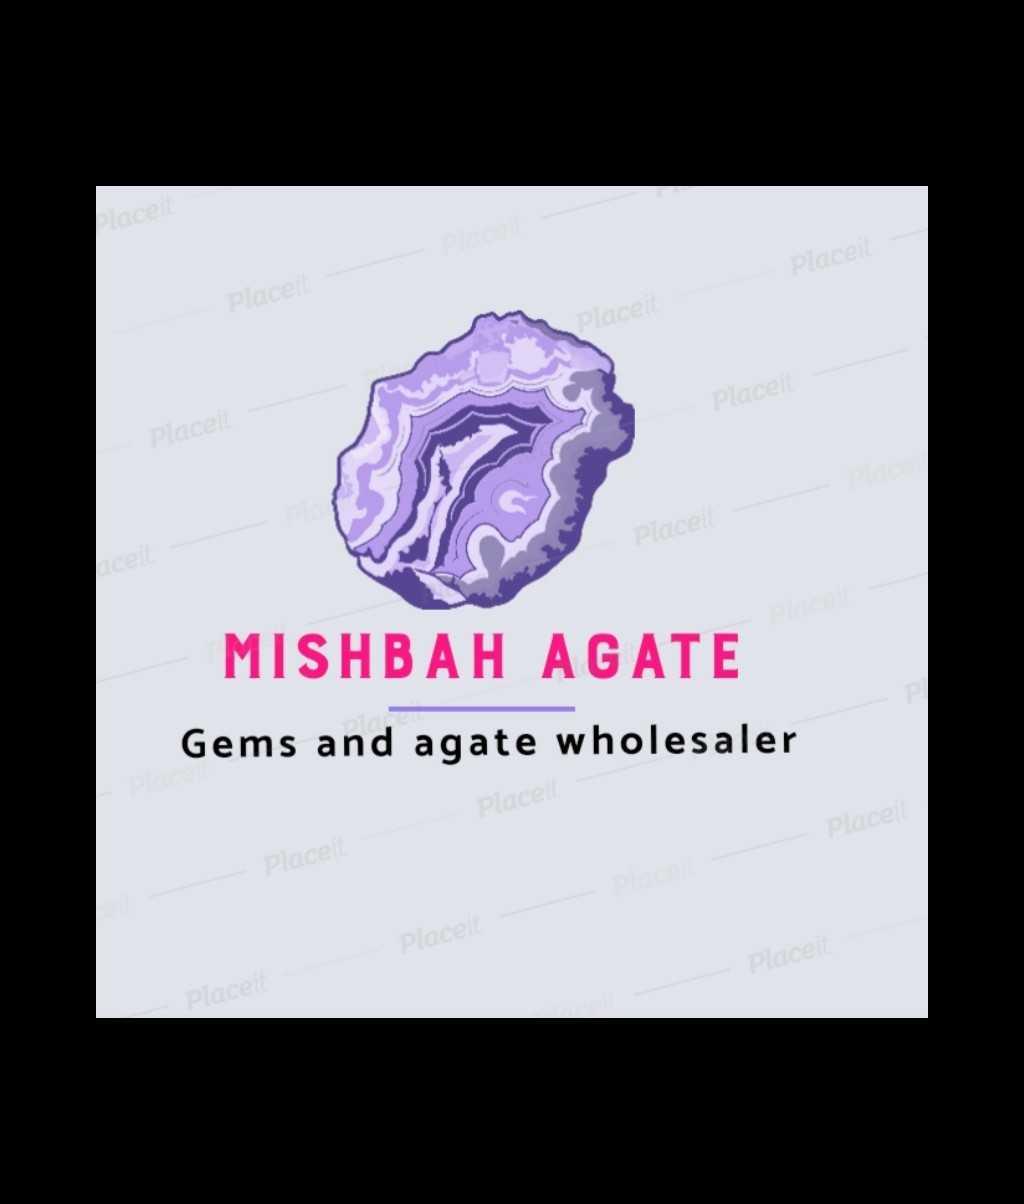 MISHBAH AGATE